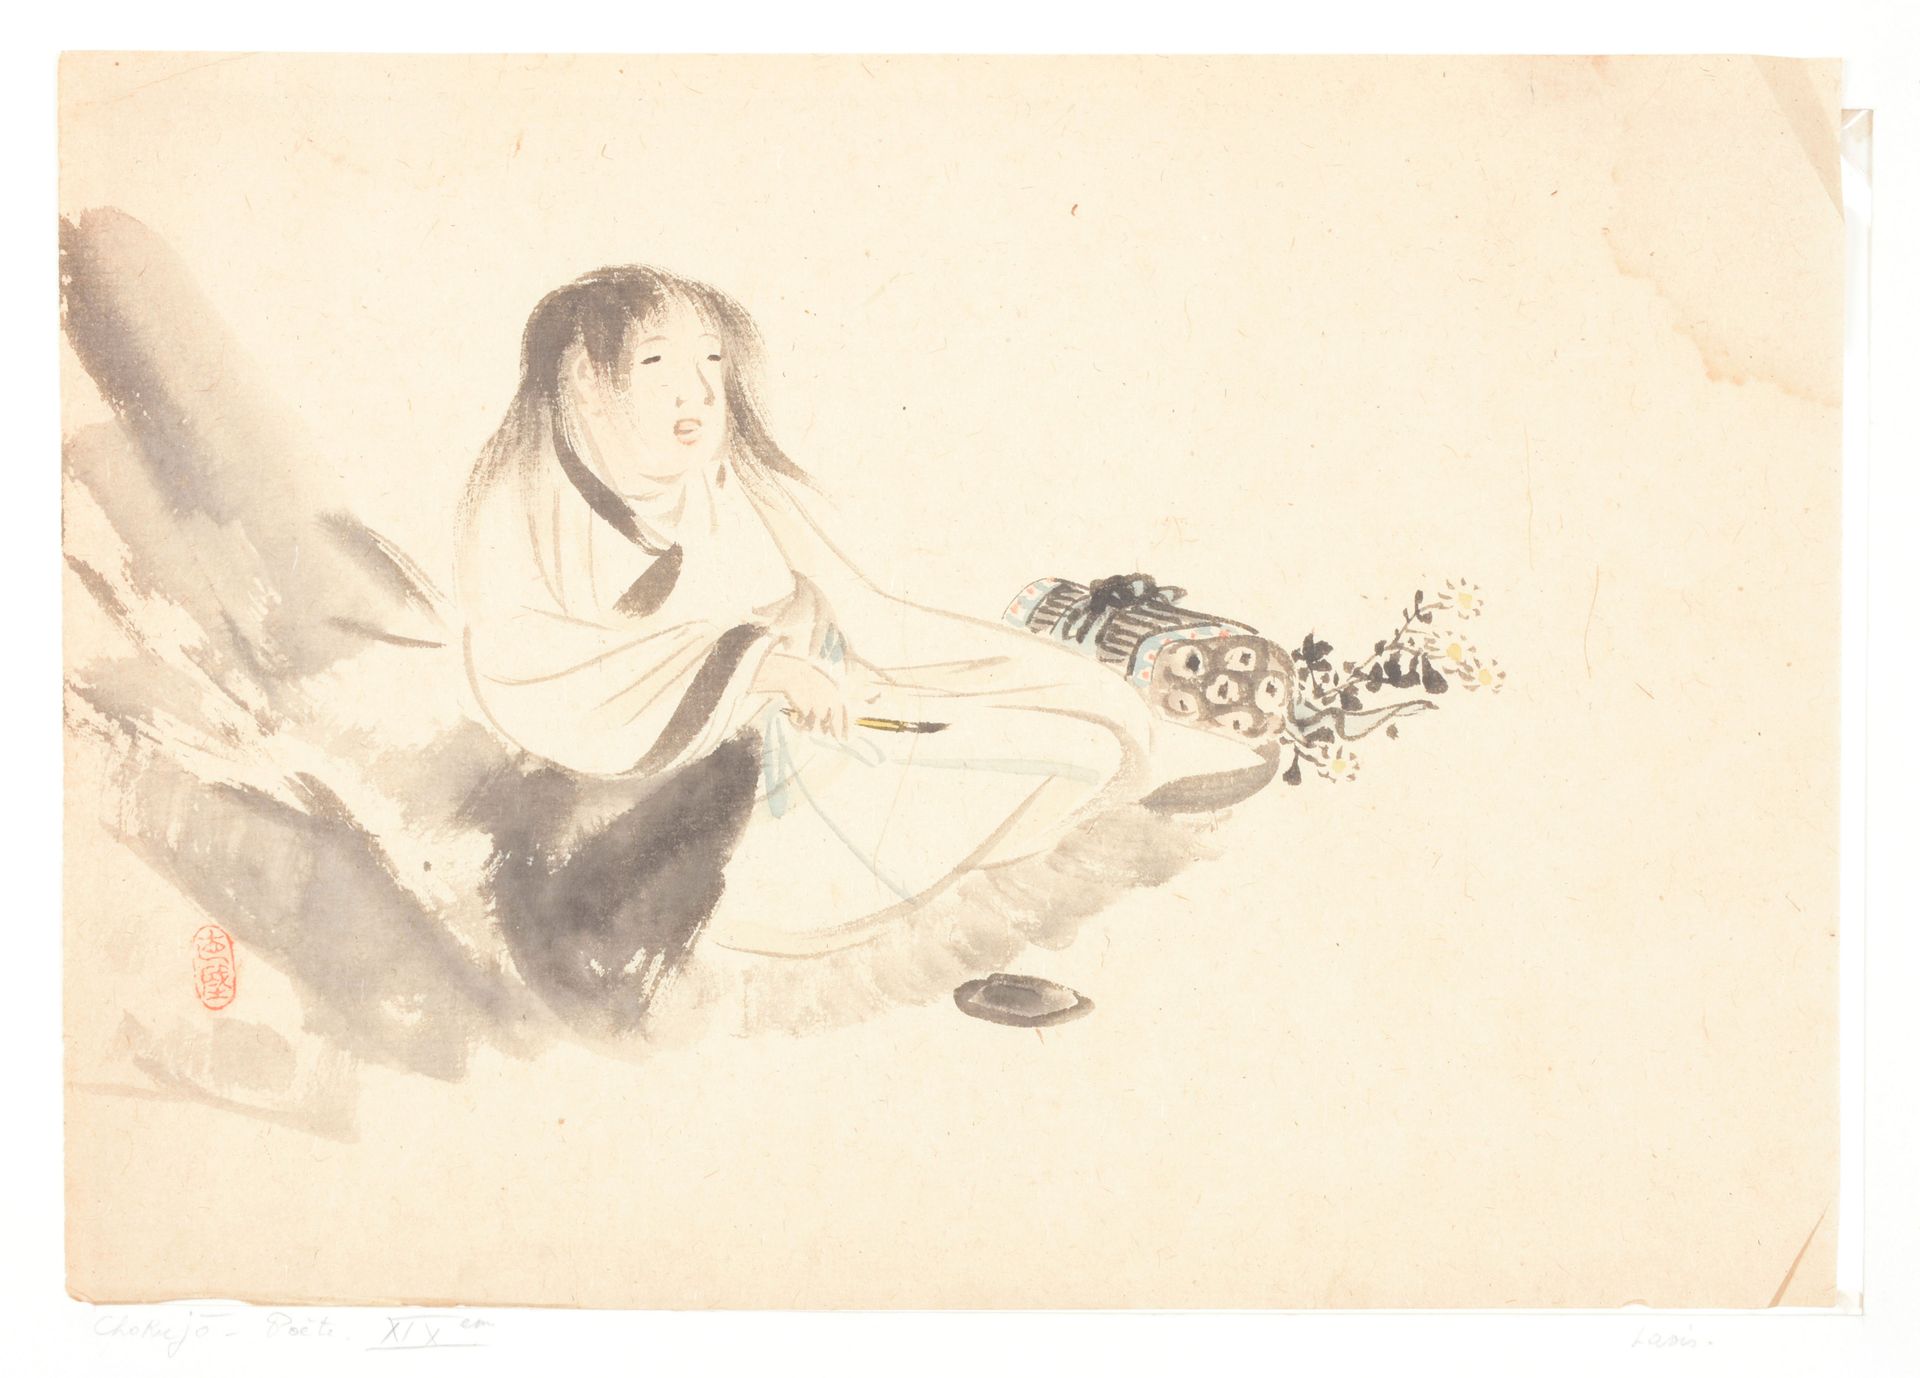 [INK DRAWING] Japanese poet

23,7 x 35 cm, mounted